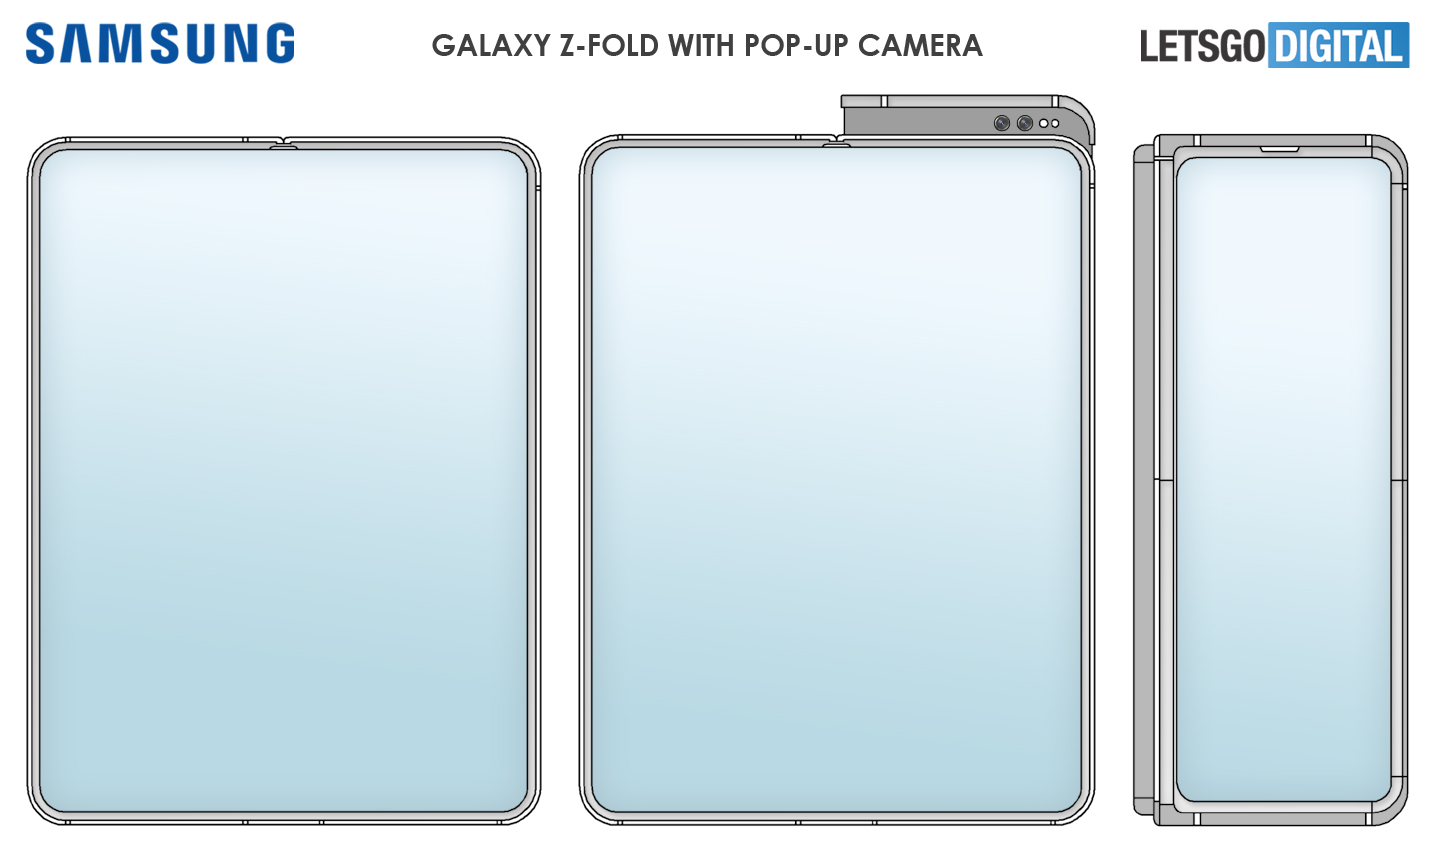 Galaxy Z Fold 5G smartphone